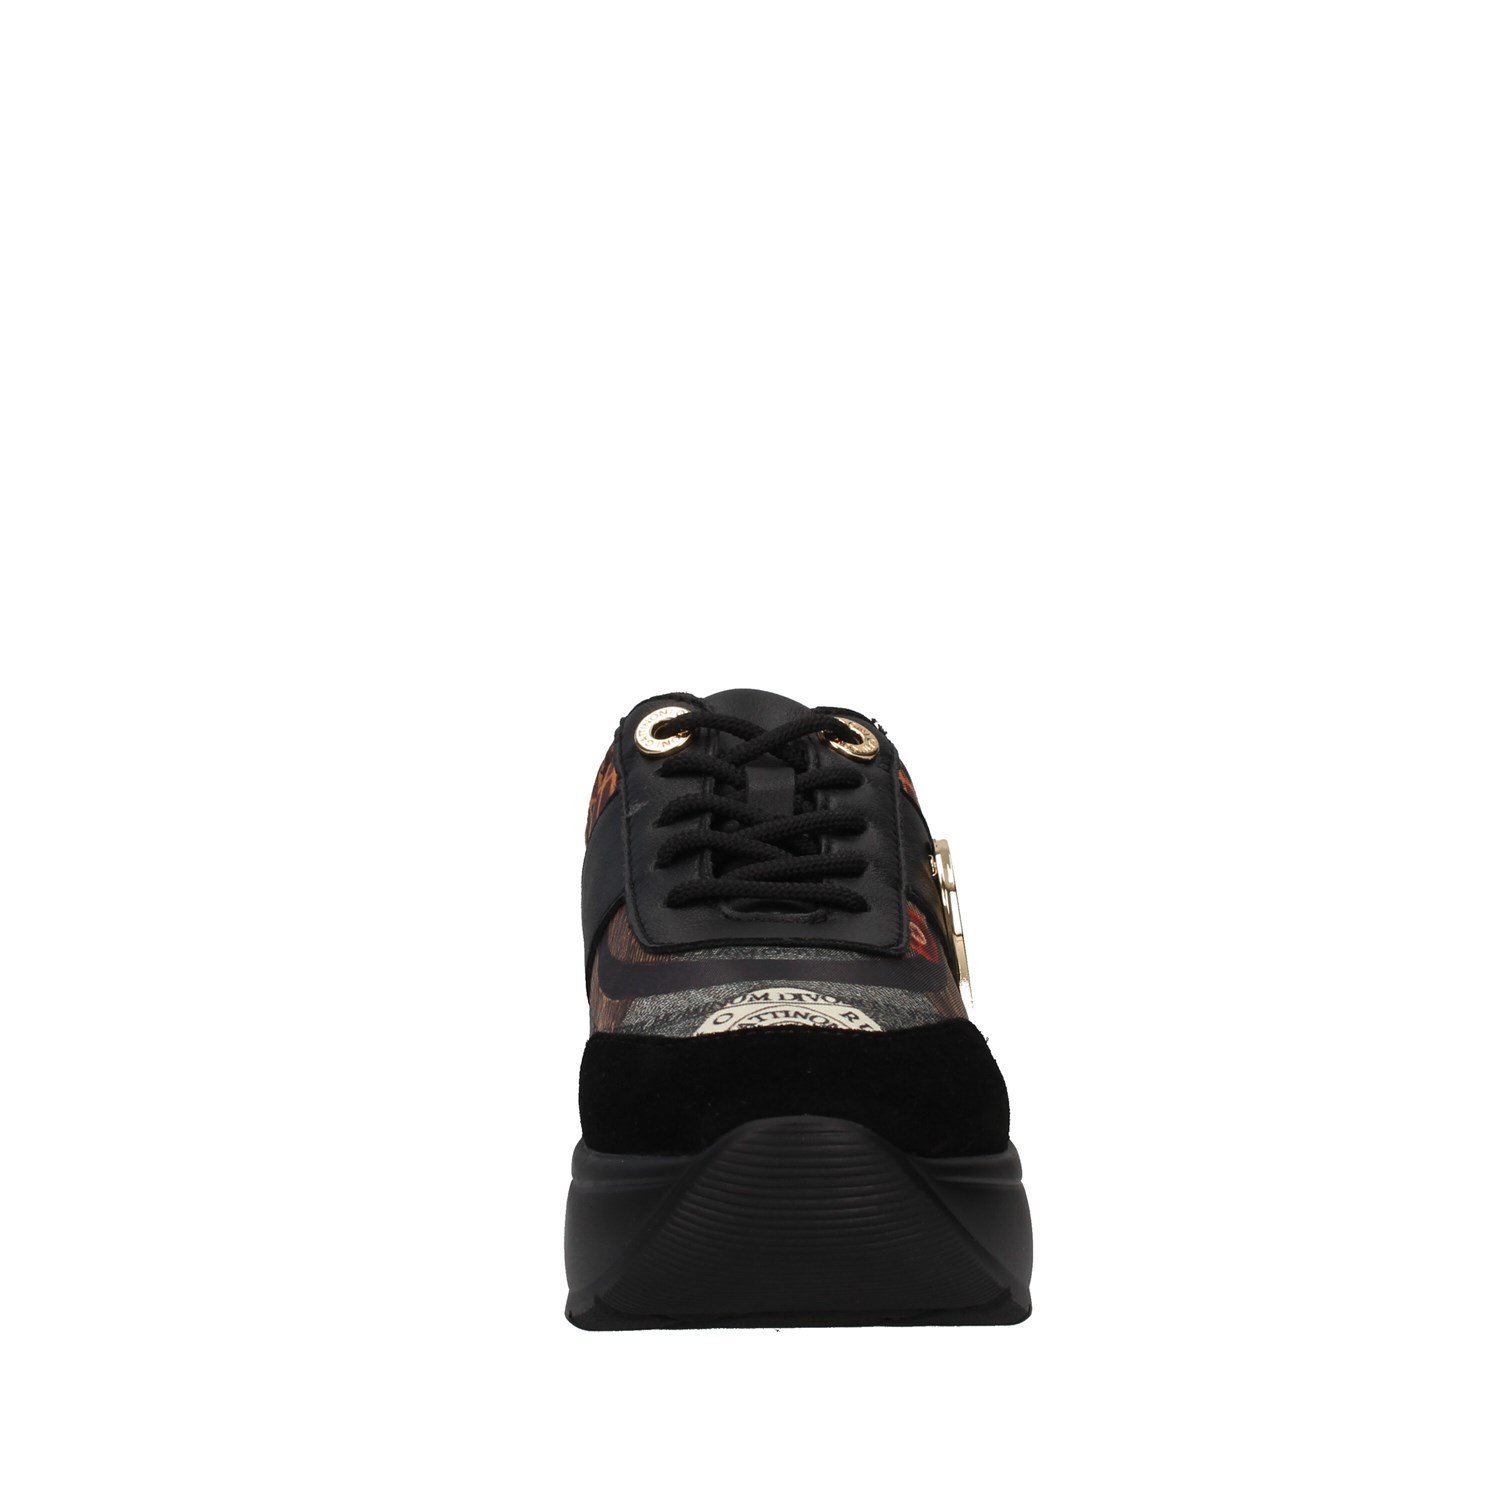 Gattinoni Shoes Woman With wedge BLACK PIGDF6264WI